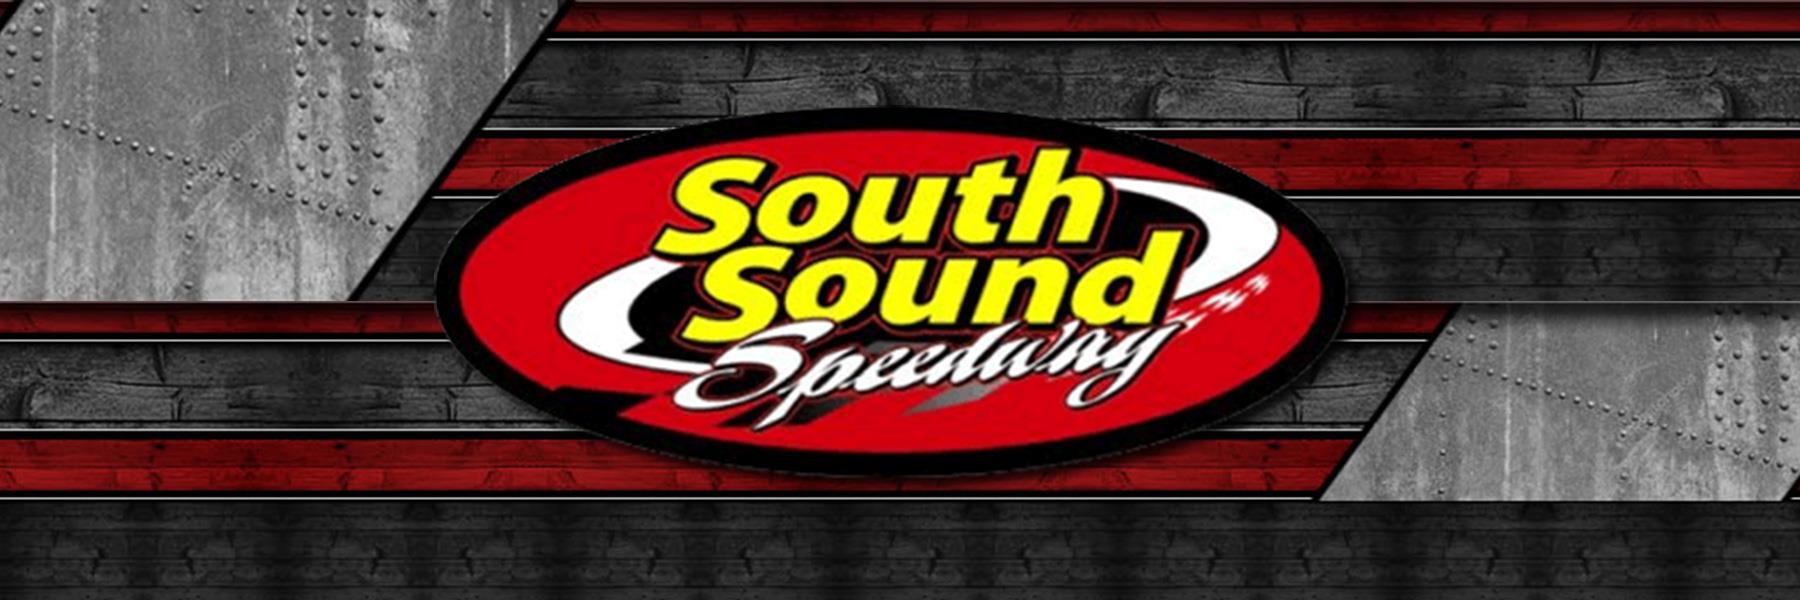 6/19/2021 - South Sound Speedway